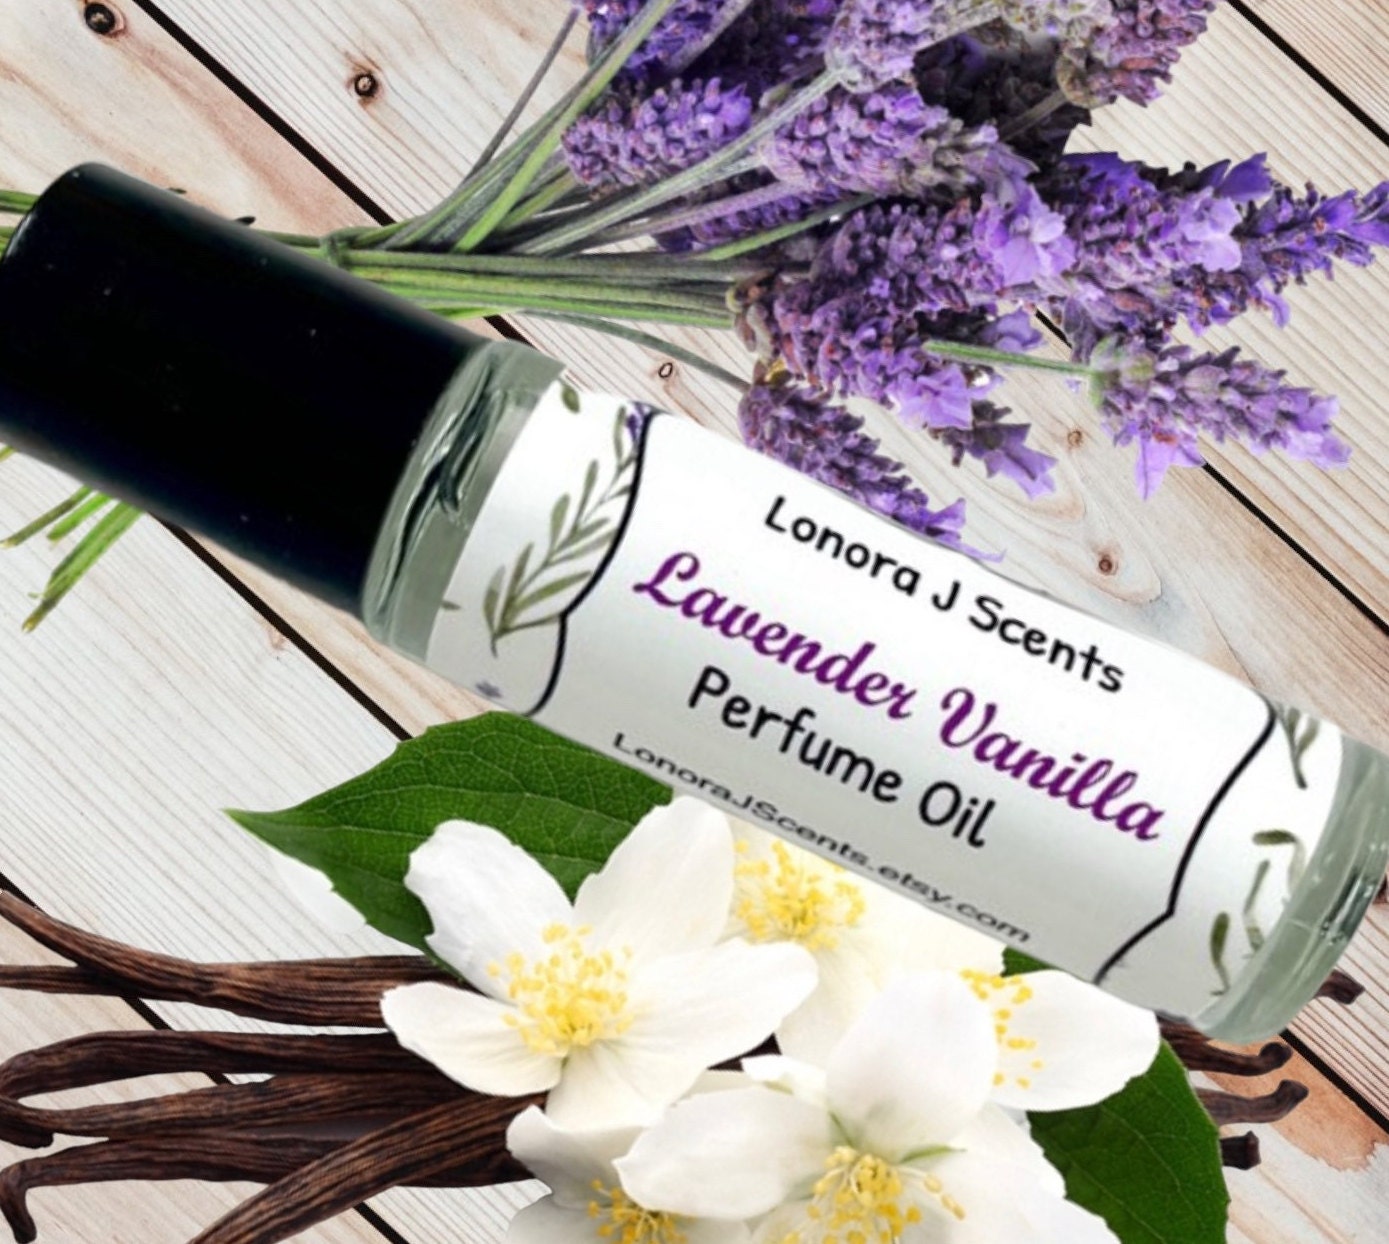 LAVENDER VANILLA (EDP) 60 ml Perfume Spray - Lavender Essential Oil & Sweet  Creamy Vanilla